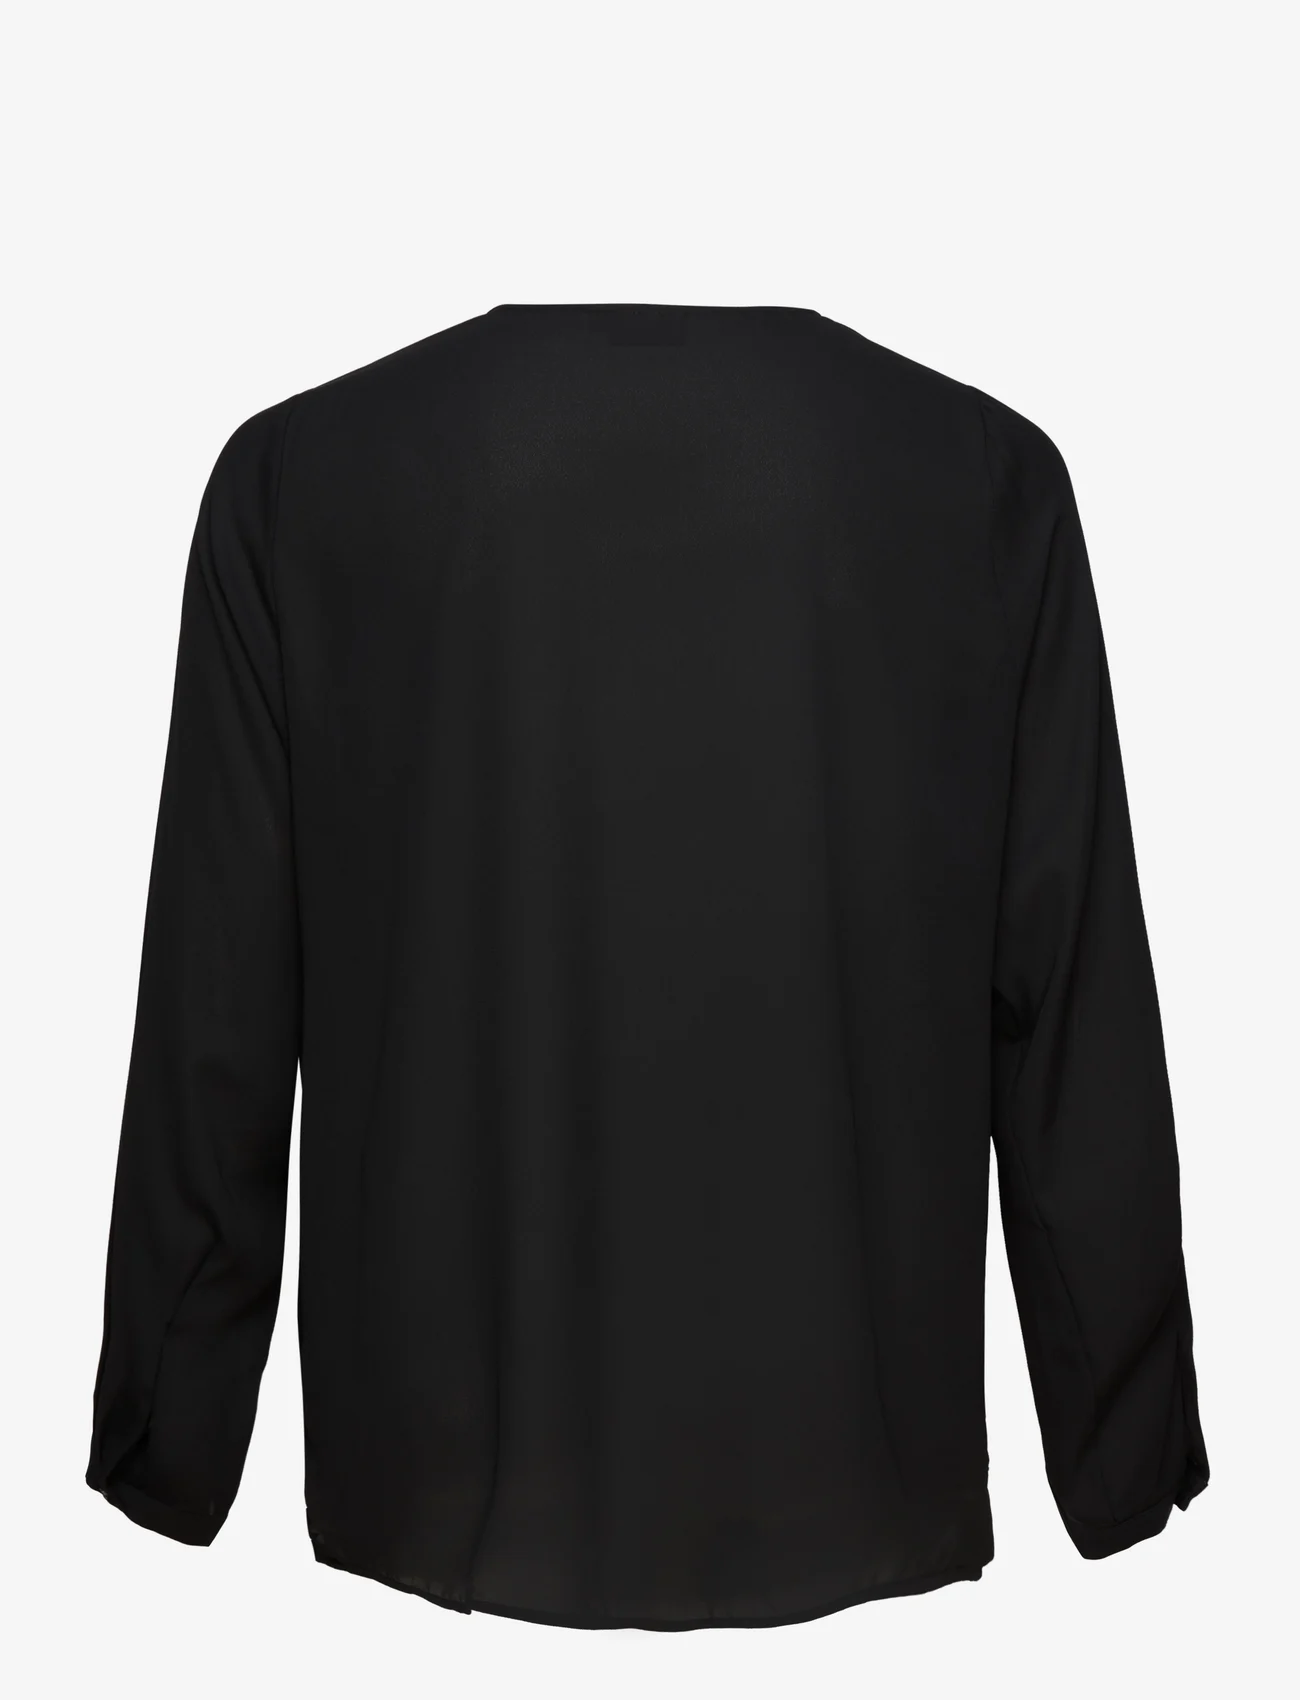 Zizzi - VSELI, L/S, SHIRT - overhemden met lange mouwen - black - 1